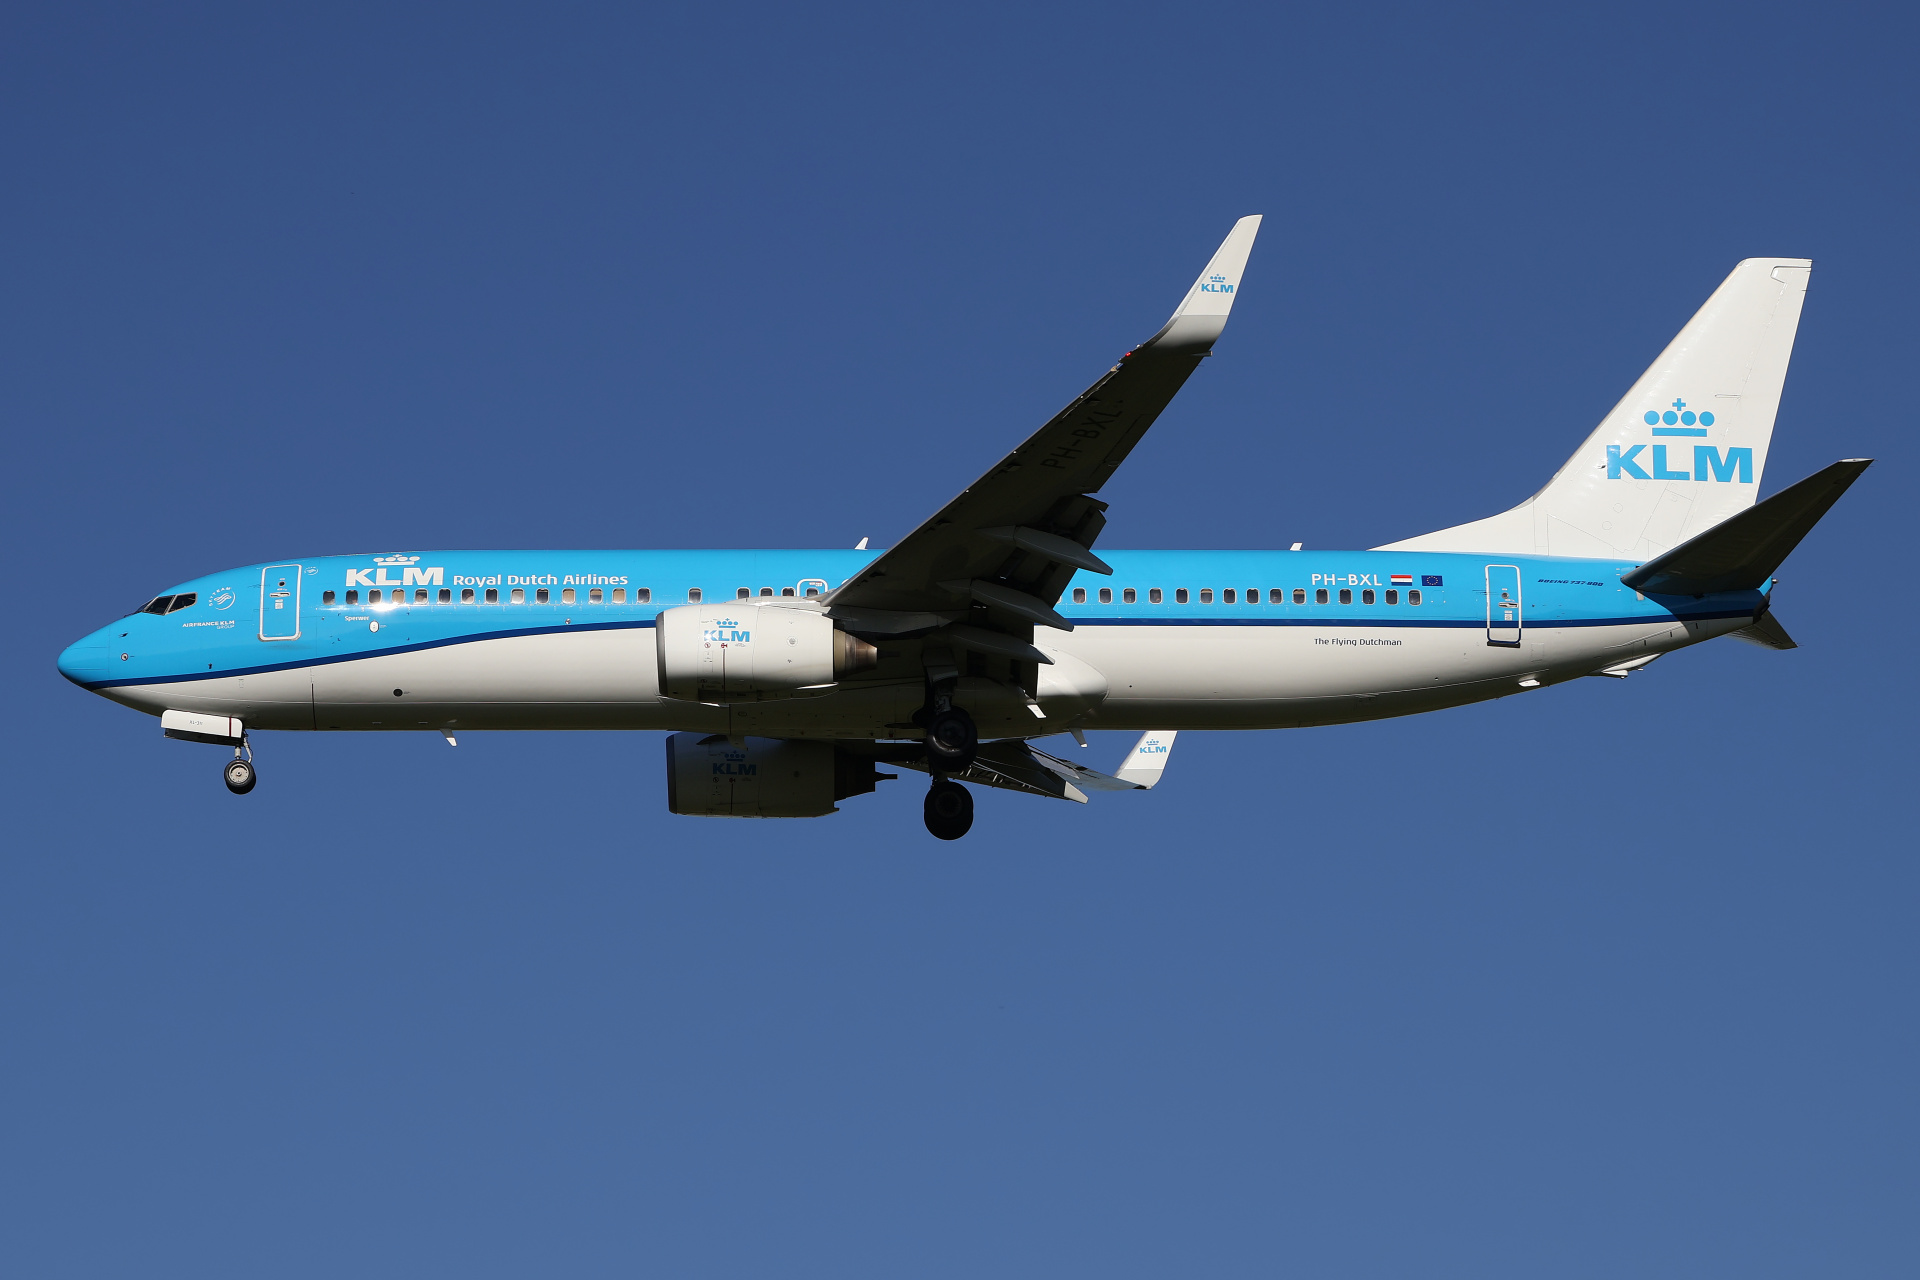 PH-BXL (Aircraft » EPWA Spotting » Boeing 737-800 » KLM Royal Dutch Airlines)